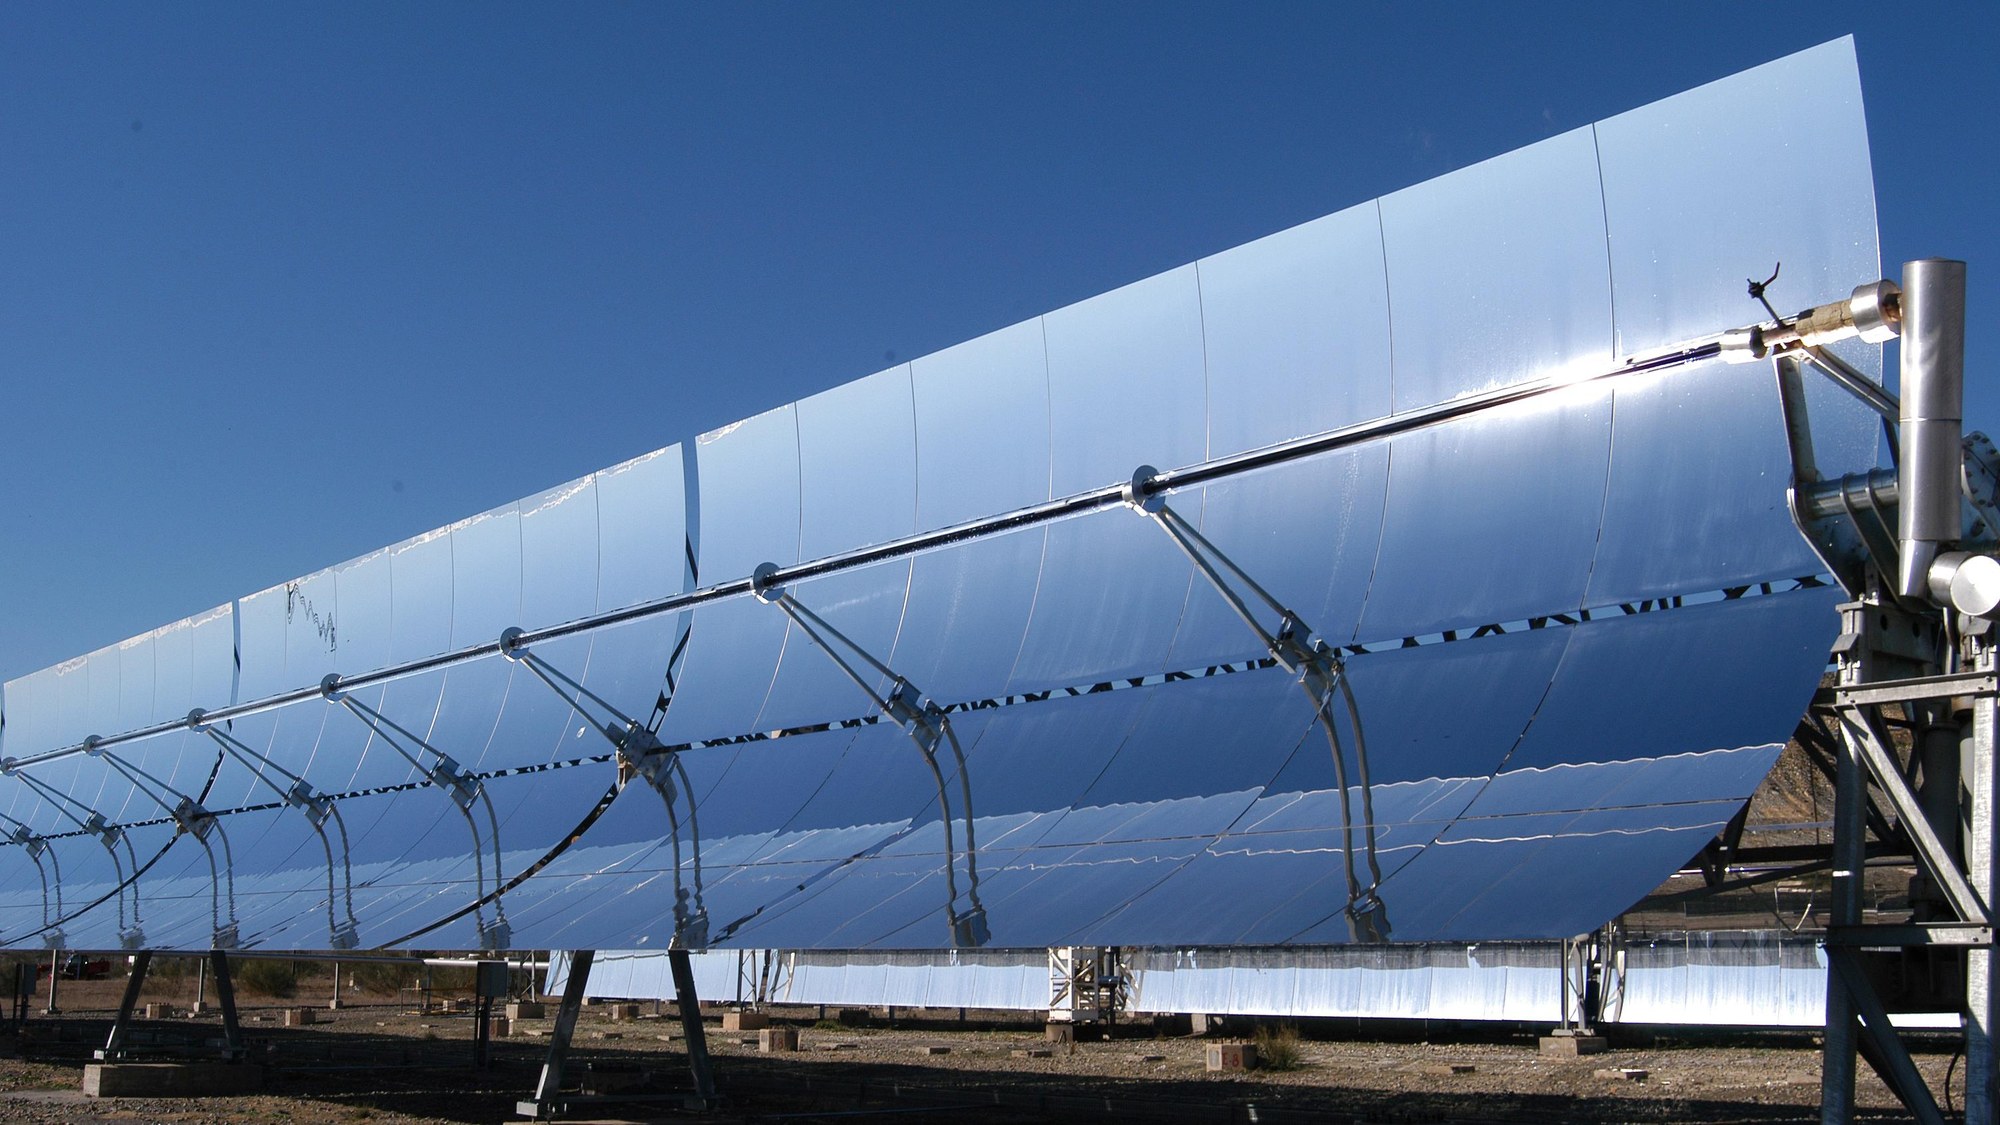 Parabolic-trough solar collector at Plataforma Solar de Almería, owned by the Spanish research centre CIEMAT